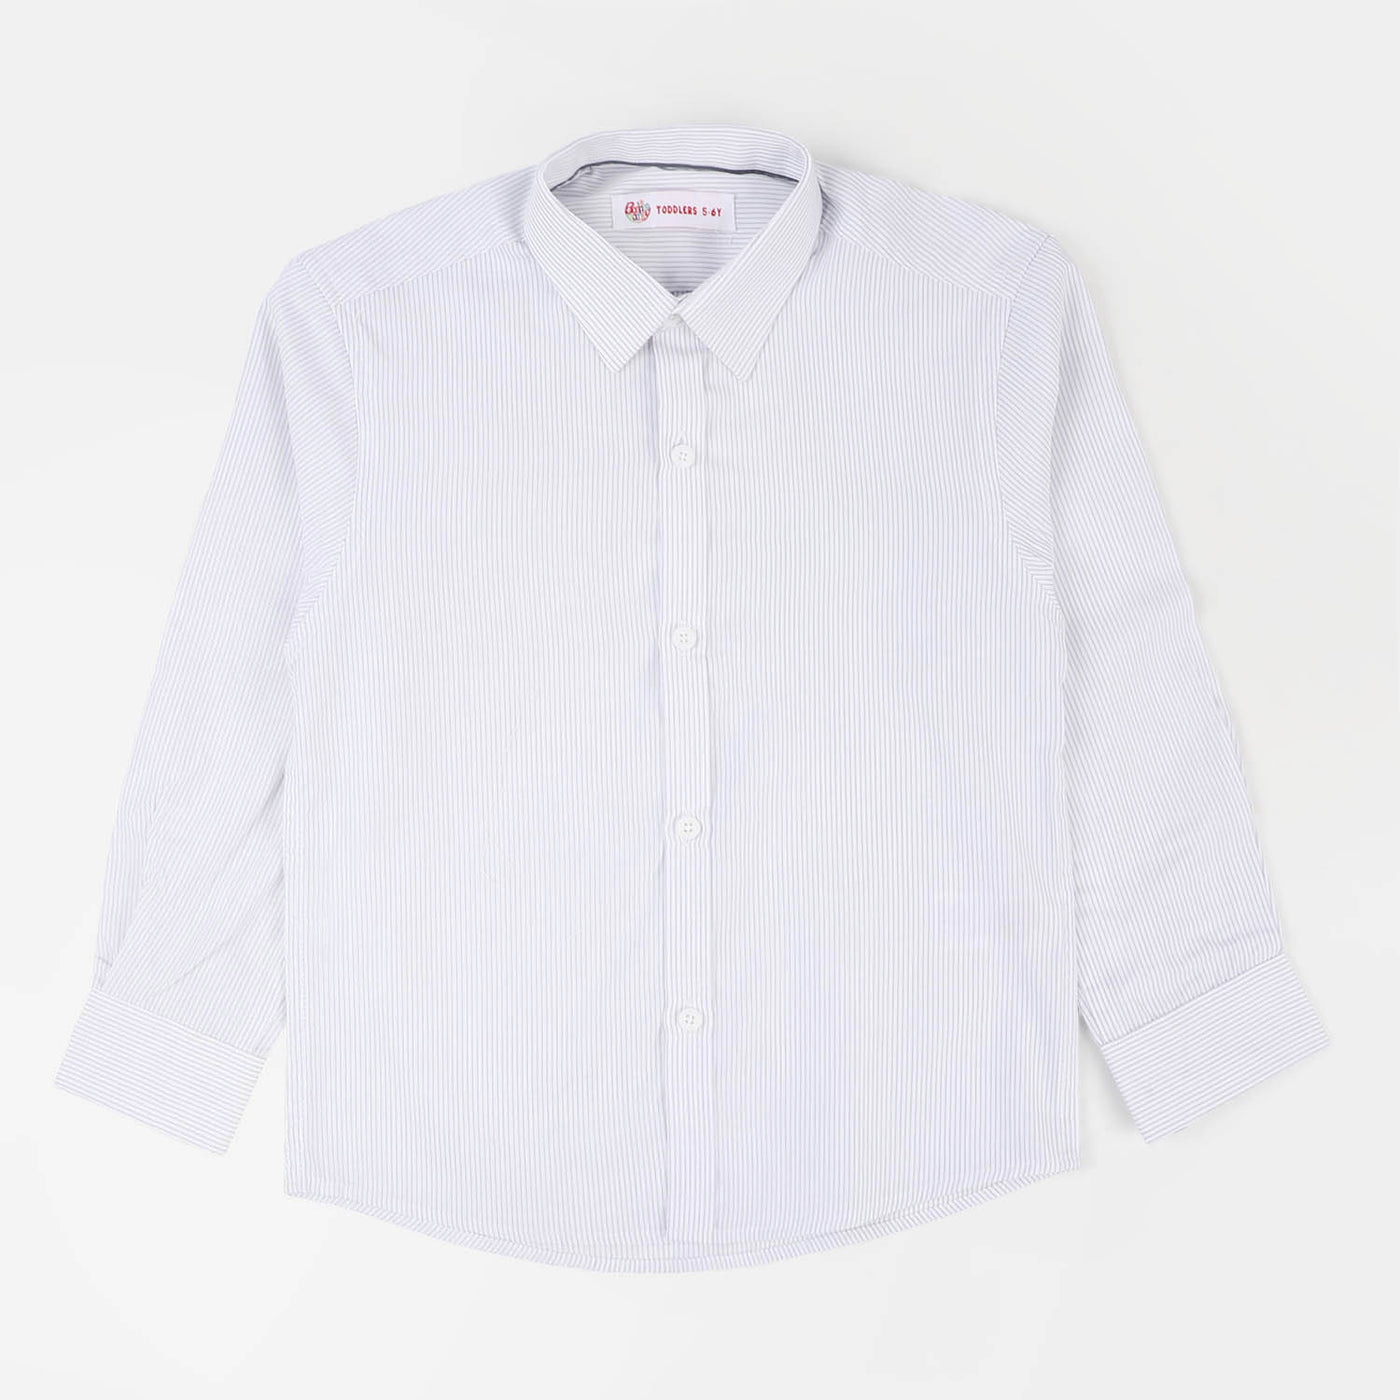 Boys Cotton Formal Shirt - Light Gray